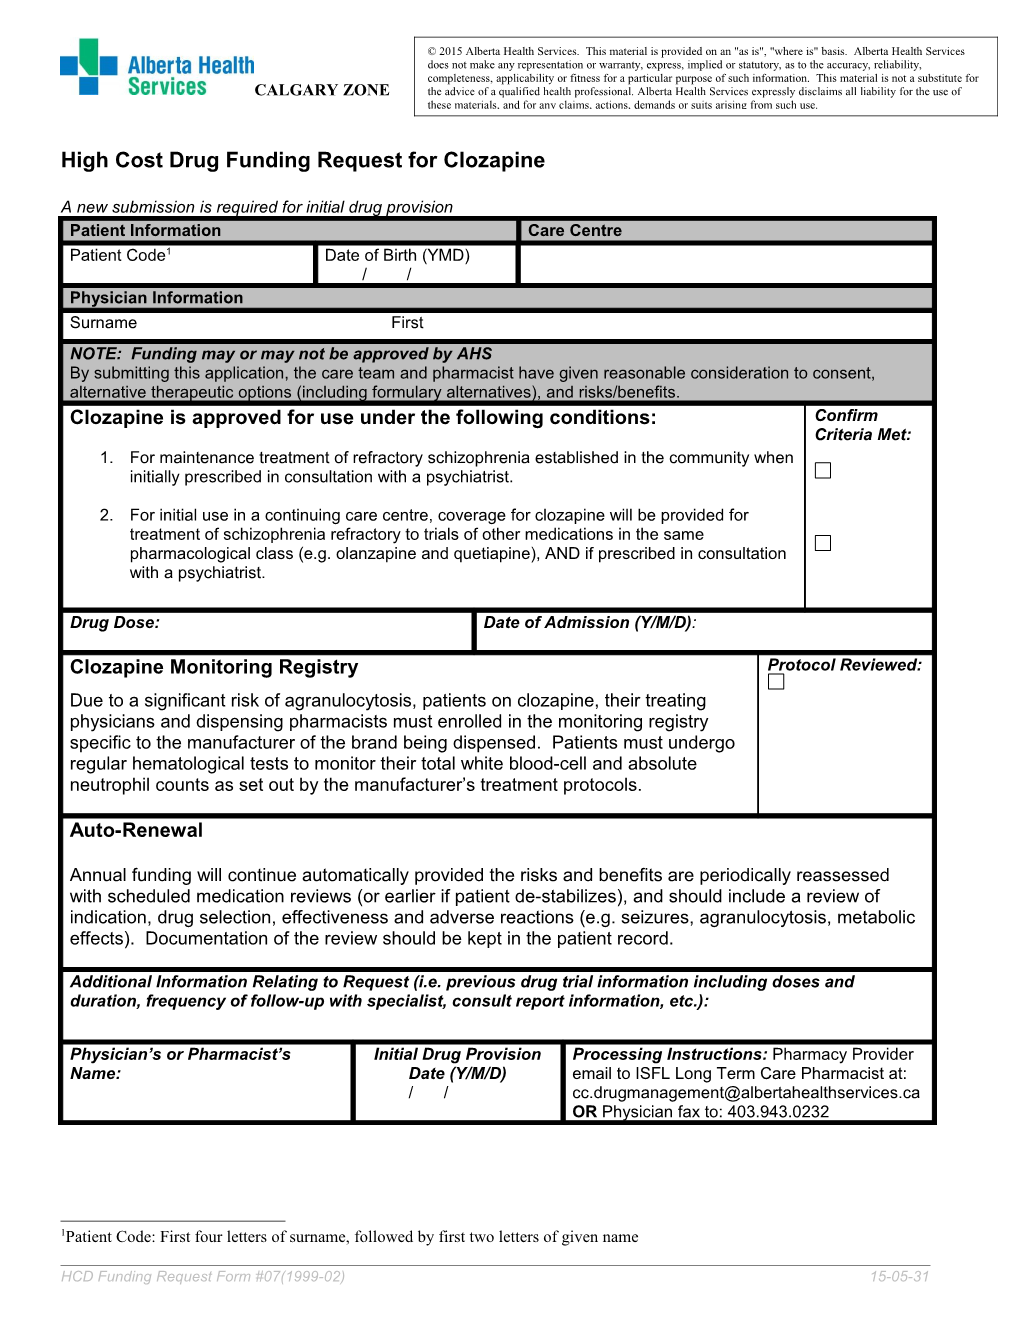 CZ-LTC-HCD-Clozapine Funding Request Form